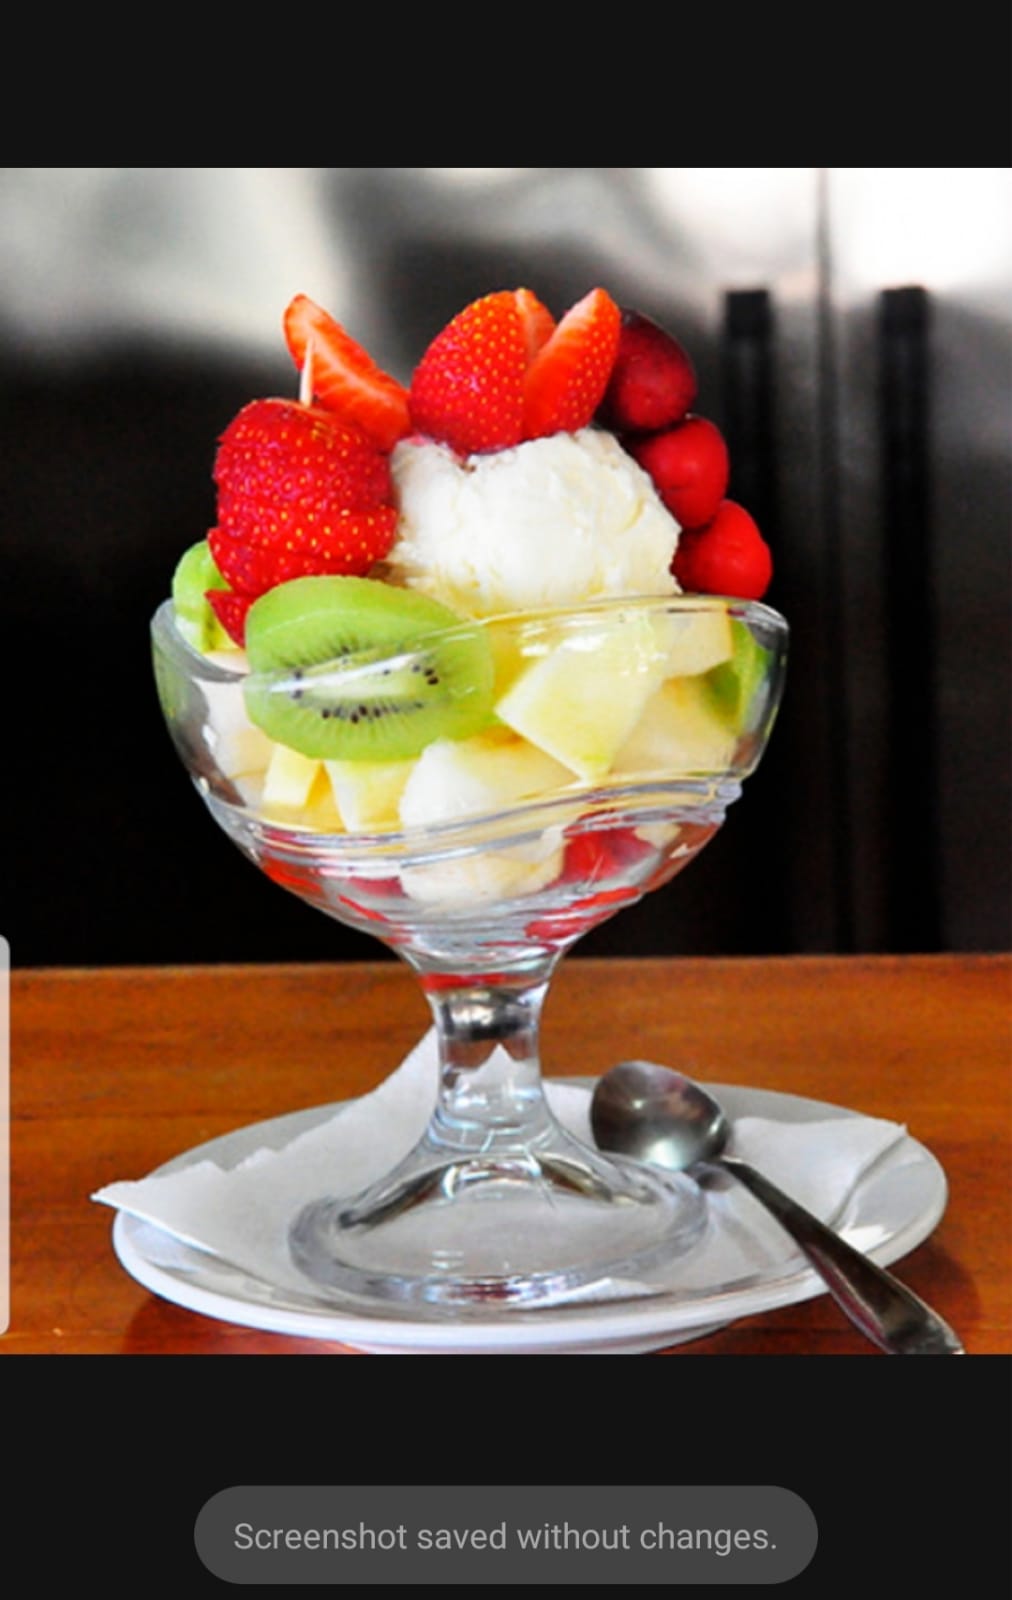 Fresh Fruit Salad with Ice cream